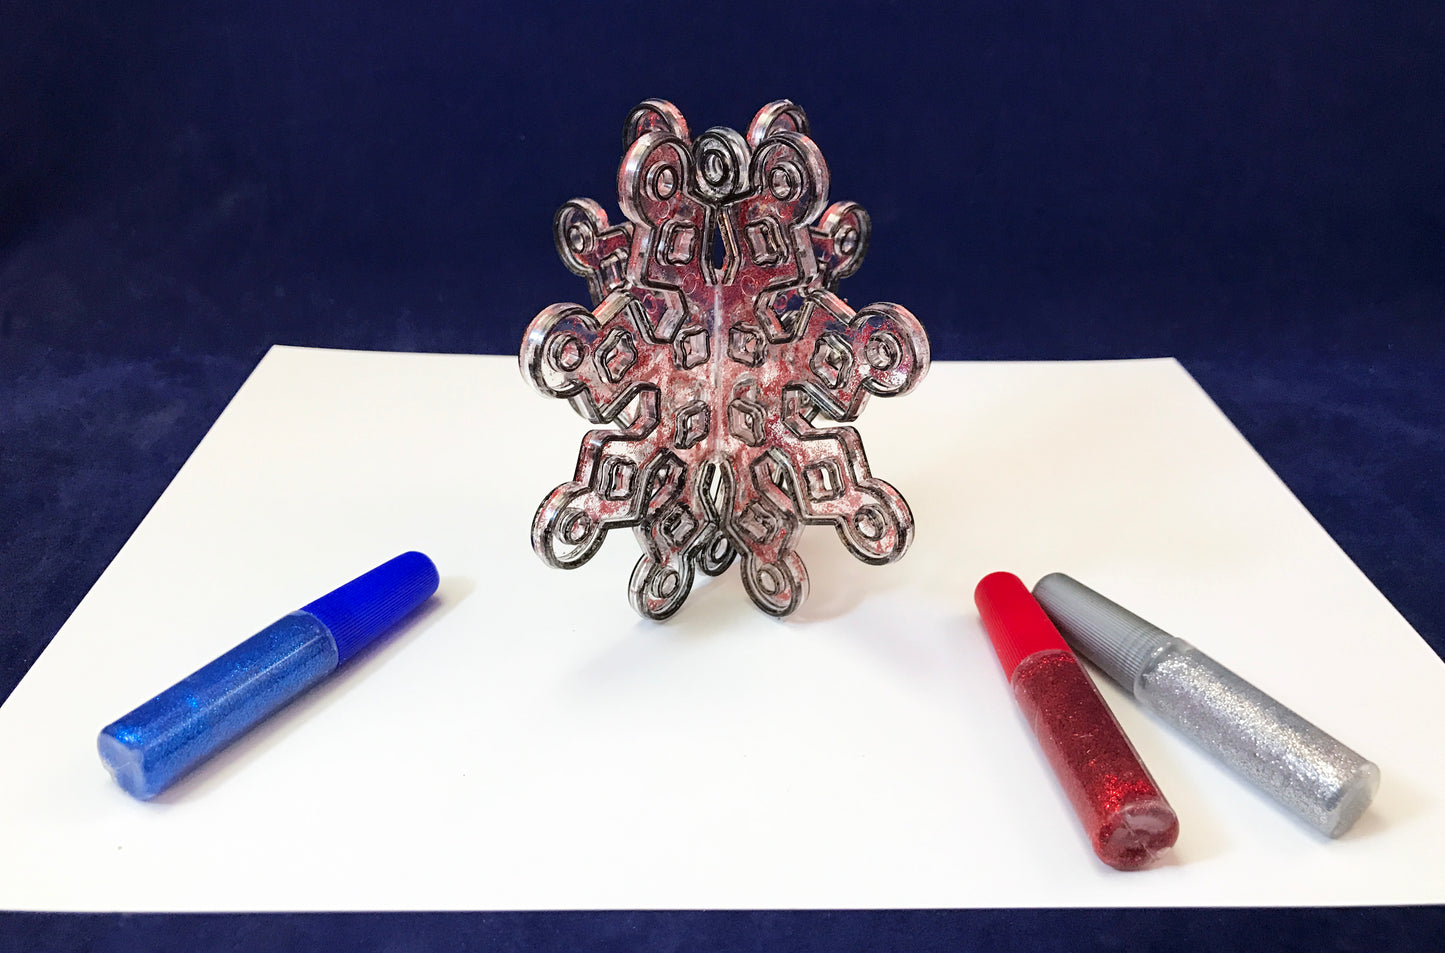 3D snowflake sun catcher art project